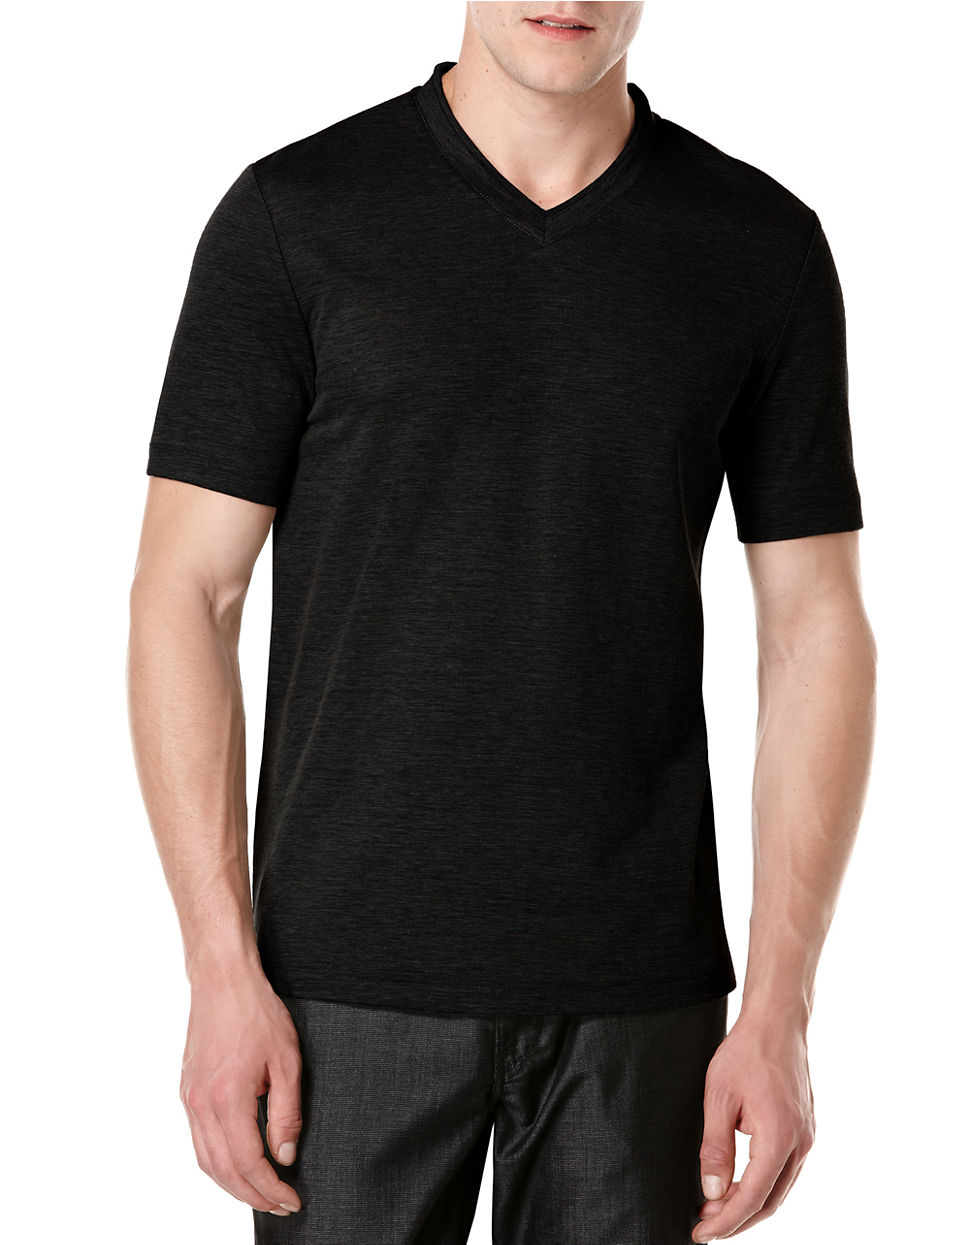 Lyst - Perry Ellis Oxford V-neck T-shirt in Black for Men